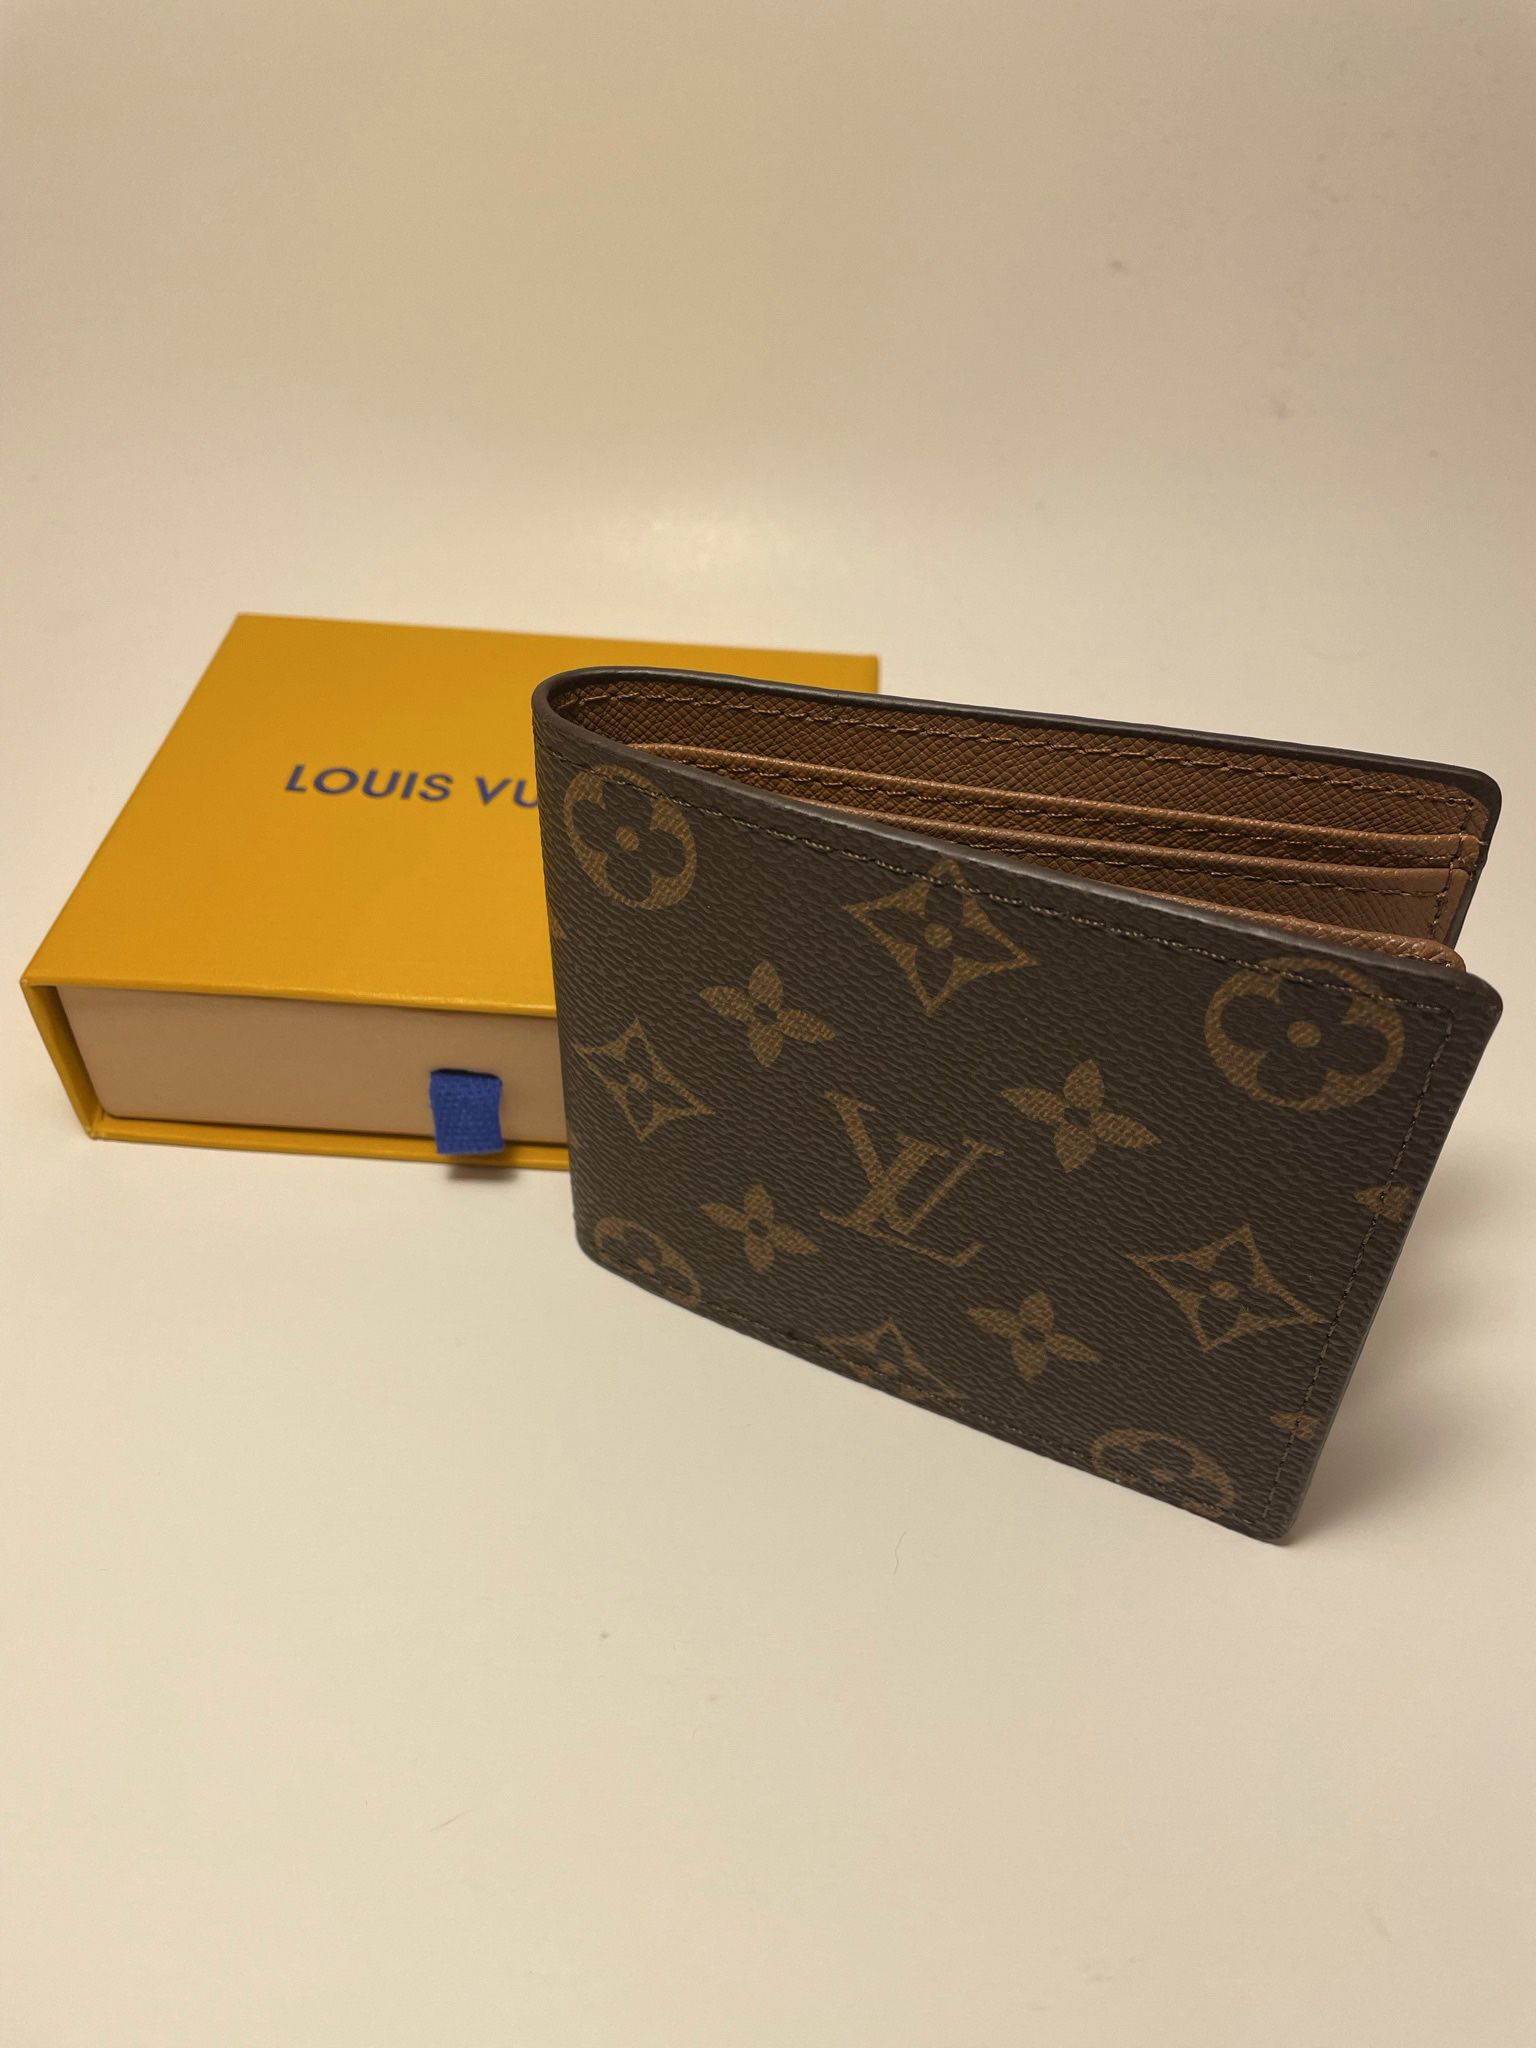 Best Louis Vuitton Wallet Box for sale in West Palm Beach, Florida